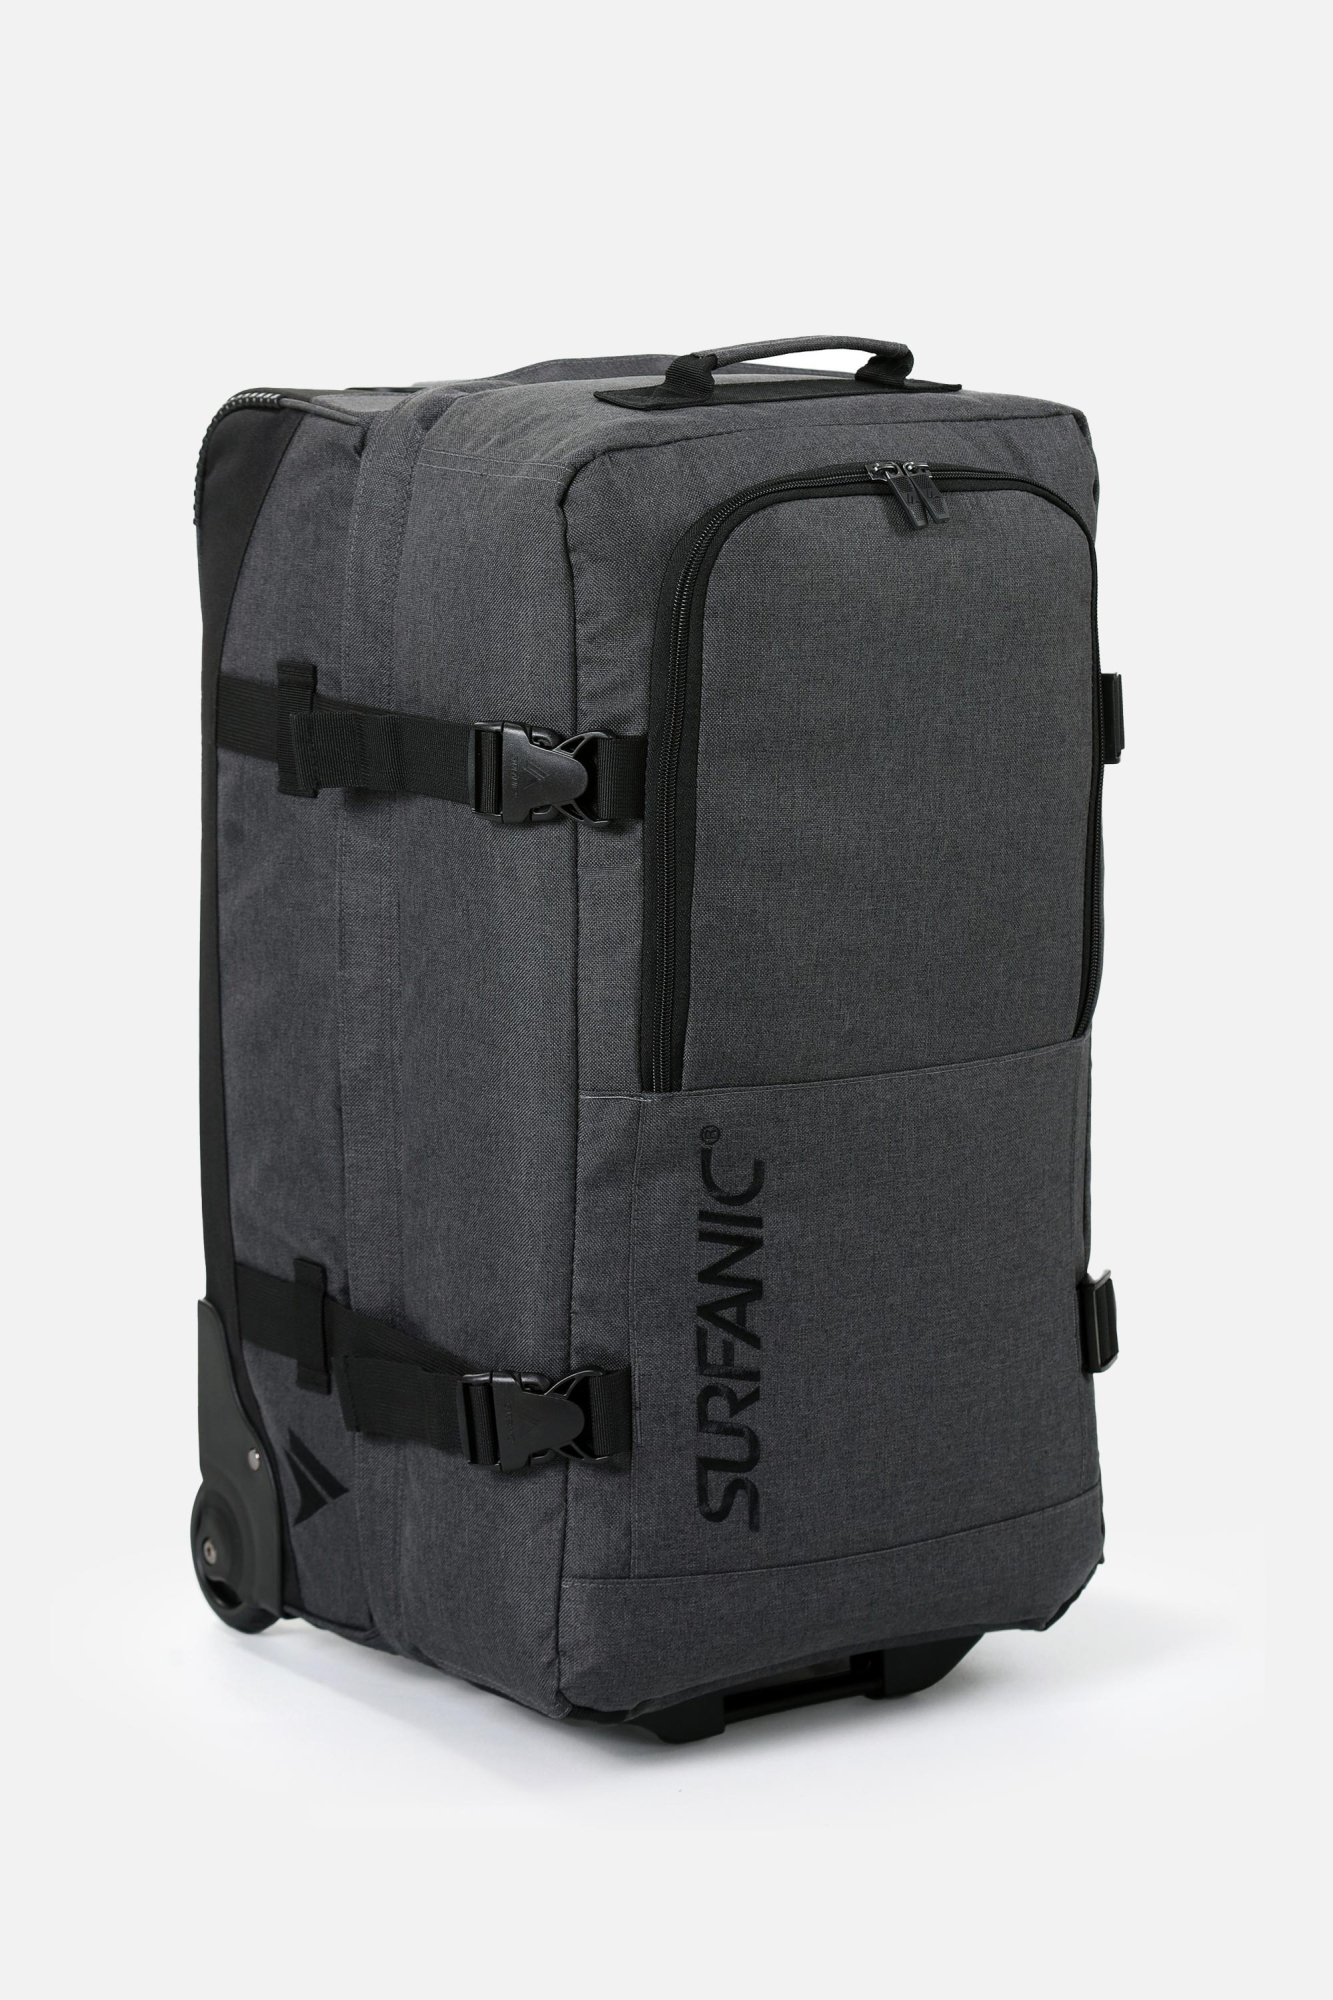 Surfanic Unisex Maxim 70 Roller Bag Grey - Size: 70 Litre